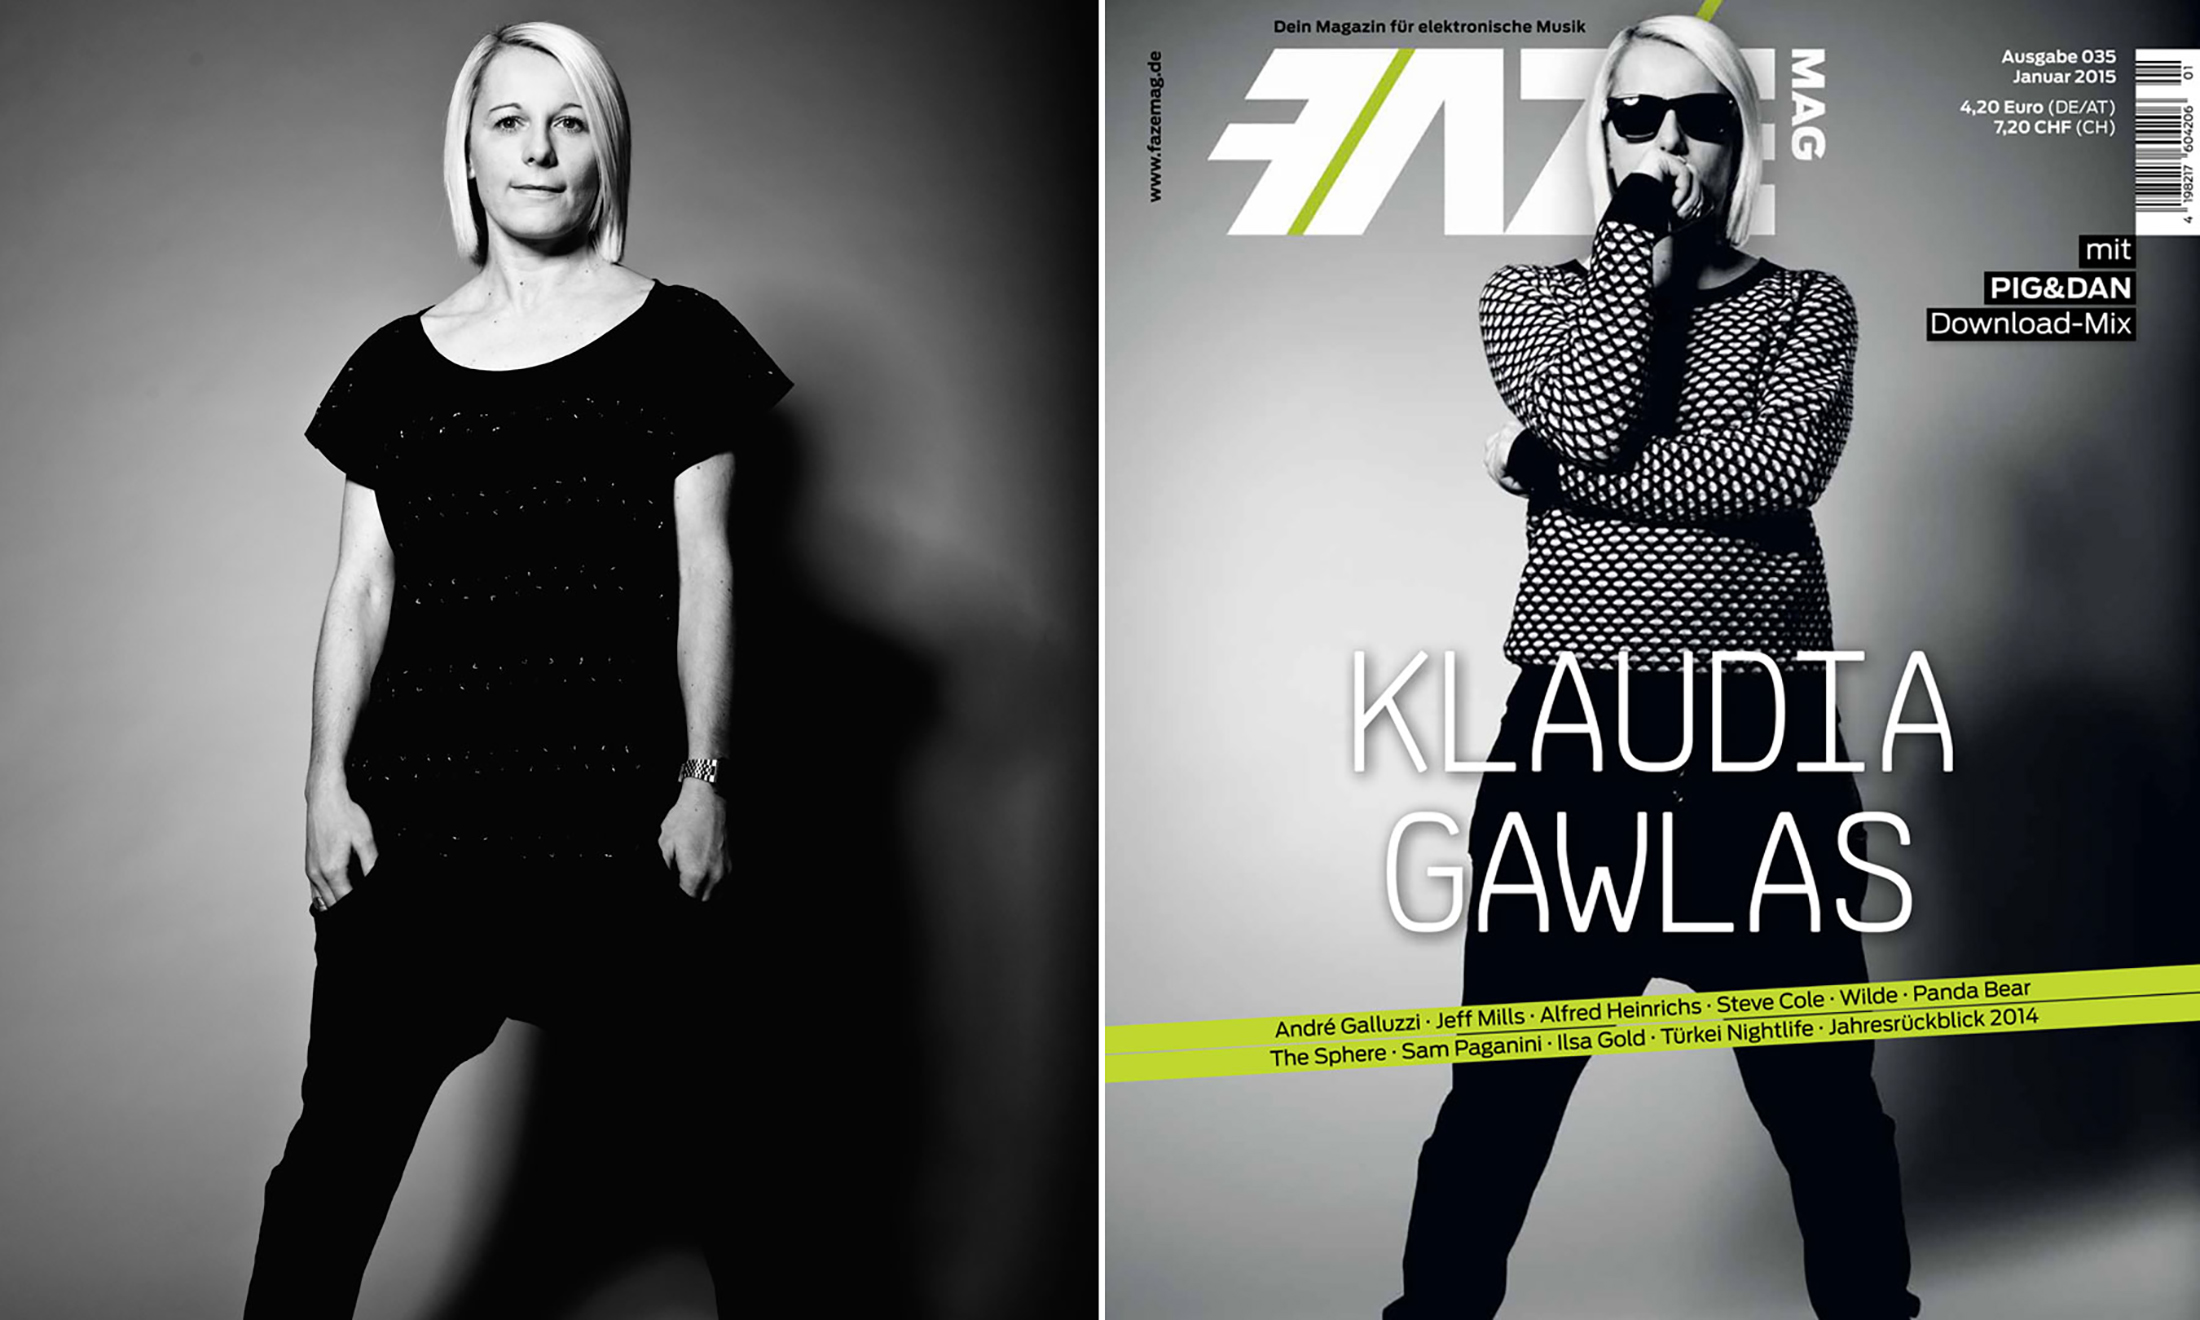 Klaudia Gawlas, DJ, DJane Florian Kresse, Portrait, Peoplefotografie, Portraitfotografie, Frankfurt, Faze Magazine